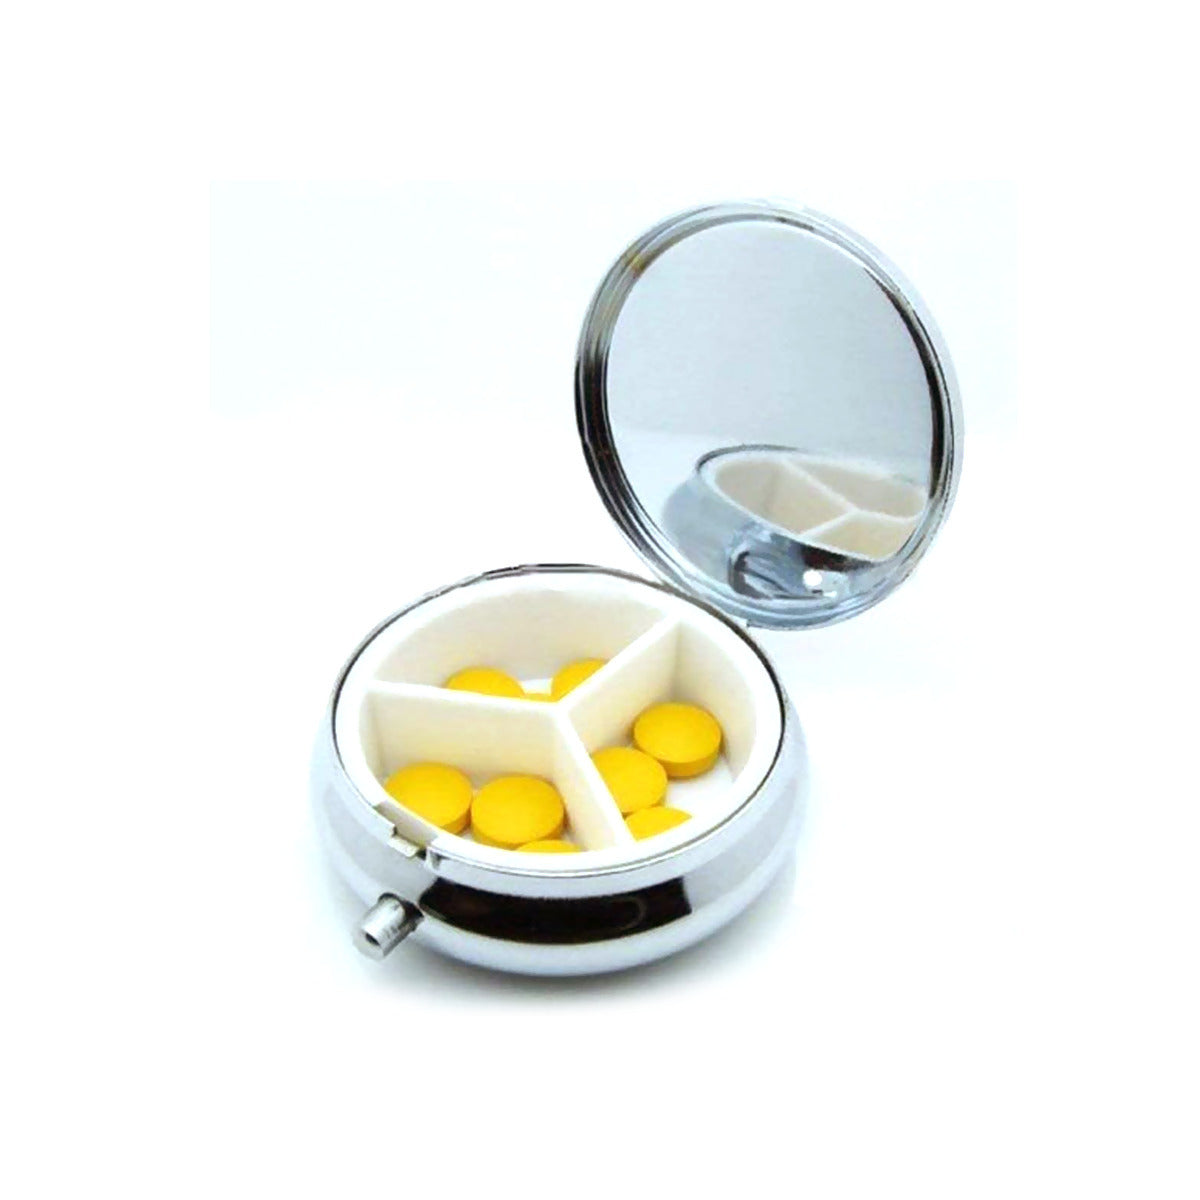 Pocket-sized pill or snuff box